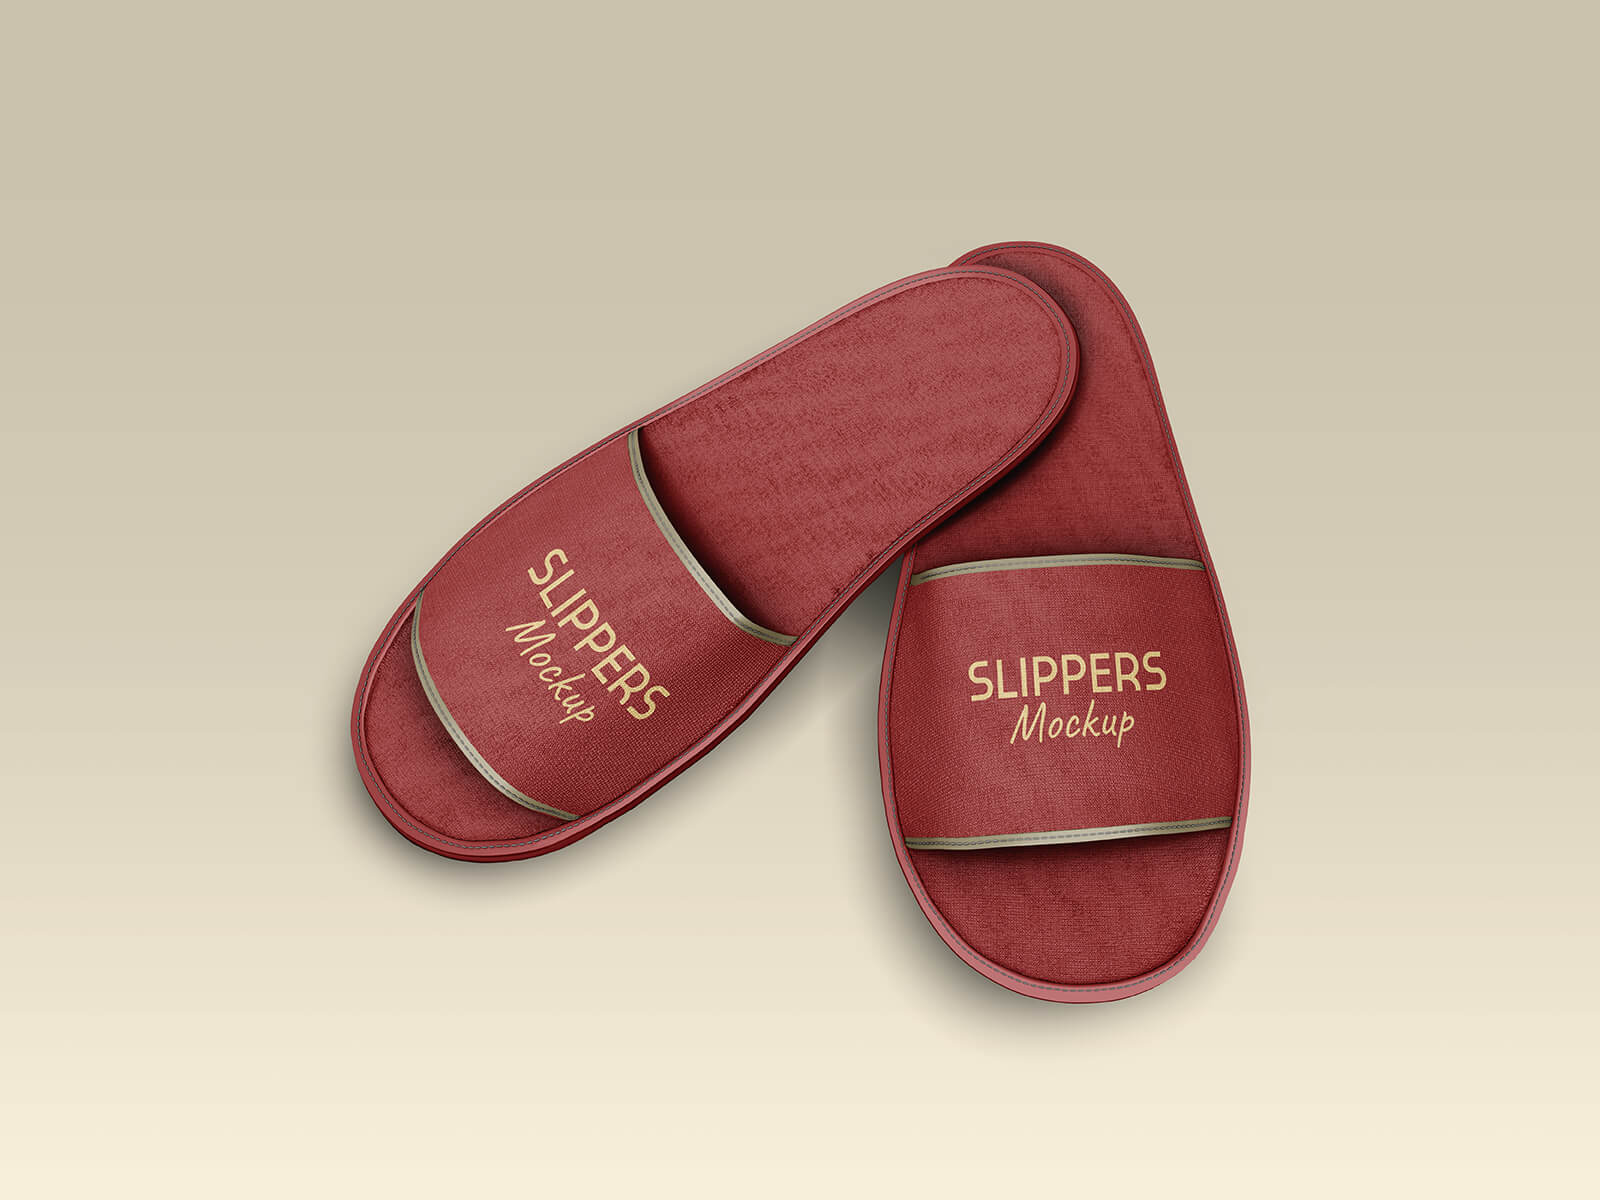 Free Hotel / Spa Slippers Mockup PSD Set